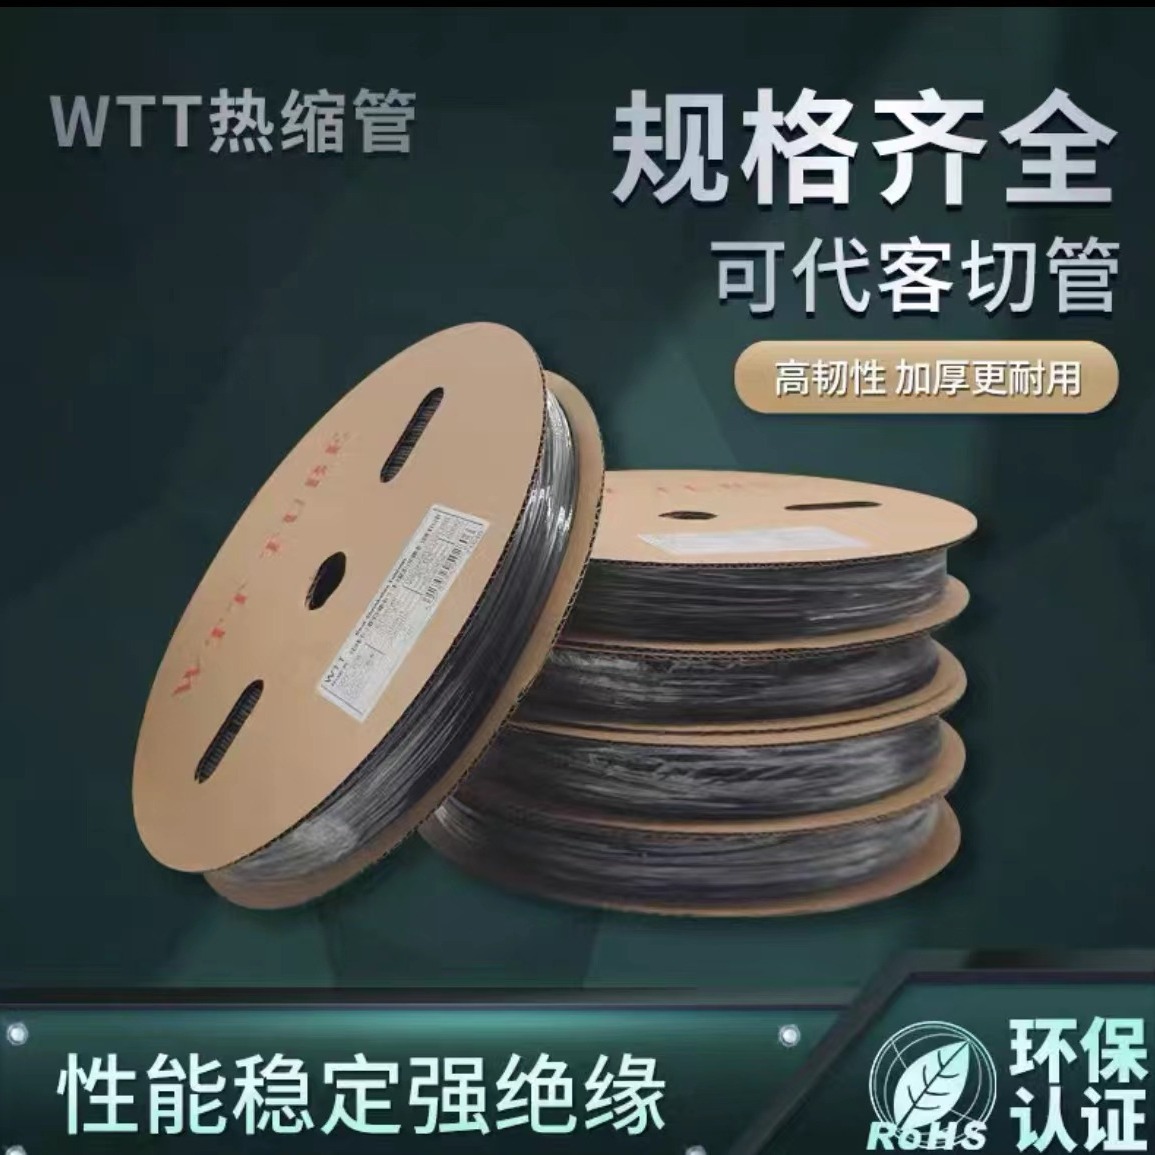 WTT热缩管绝缘套管2倍印字热收缩电线电缆电子器件黑色热缩管套